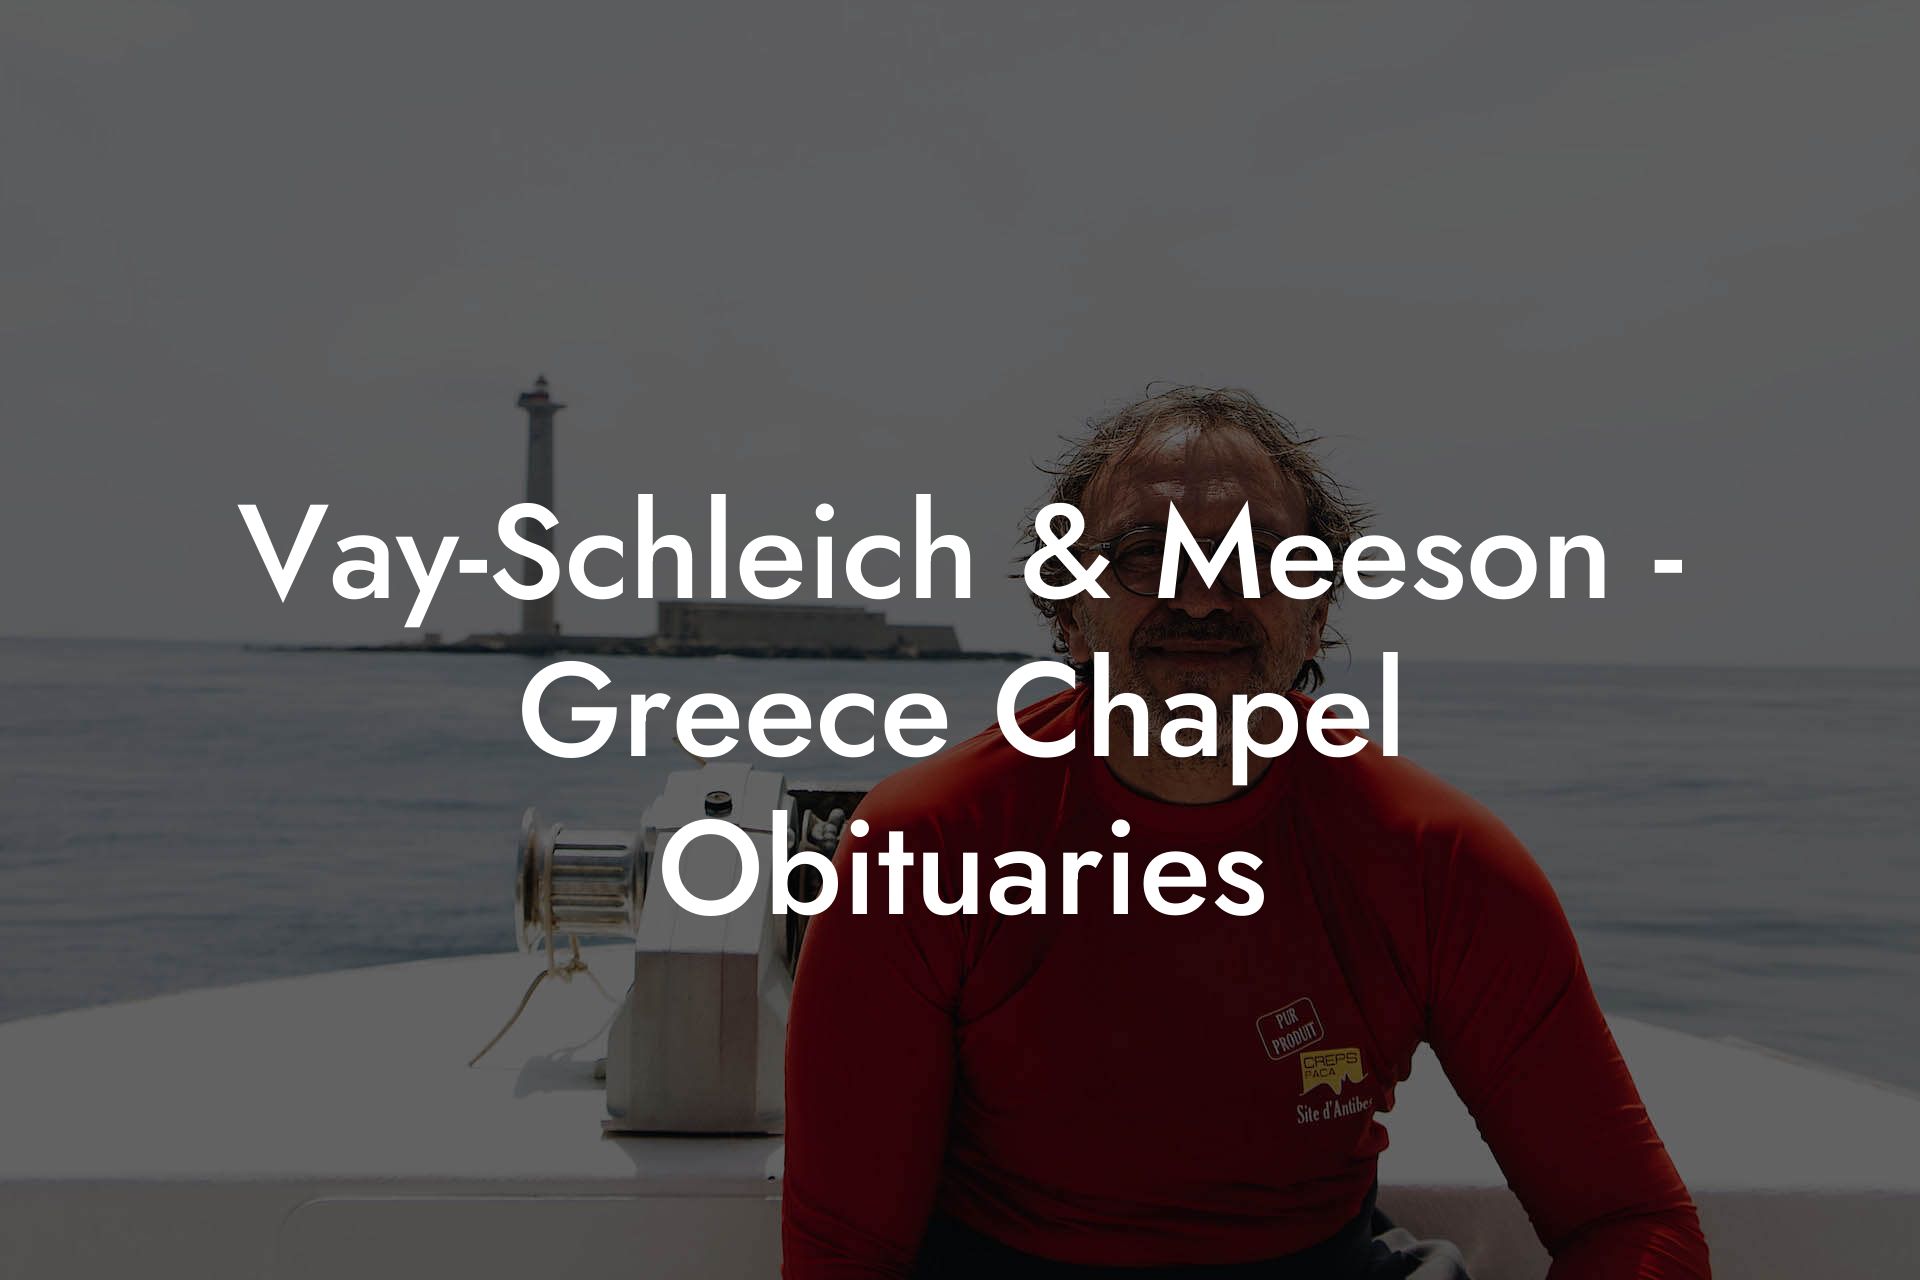 Vay-Schleich & Meeson - Greece Chapel Obituaries